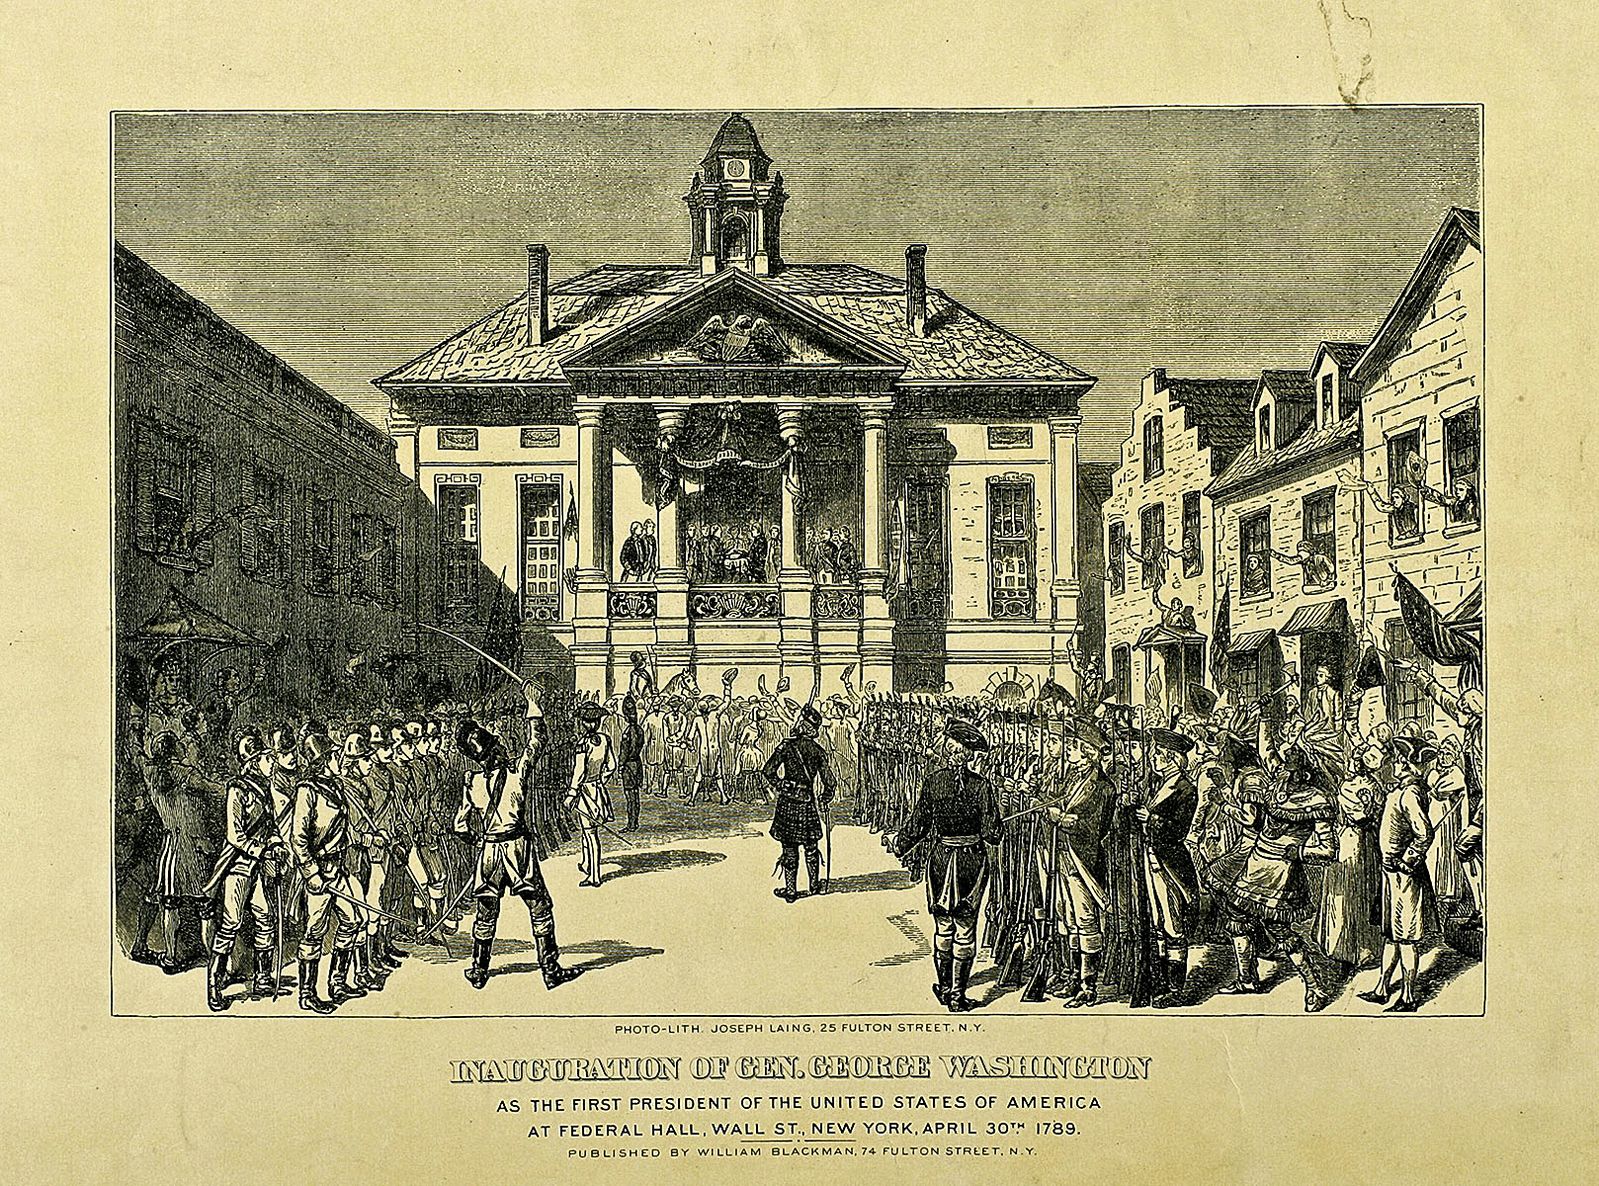 Inauguration of George Washington